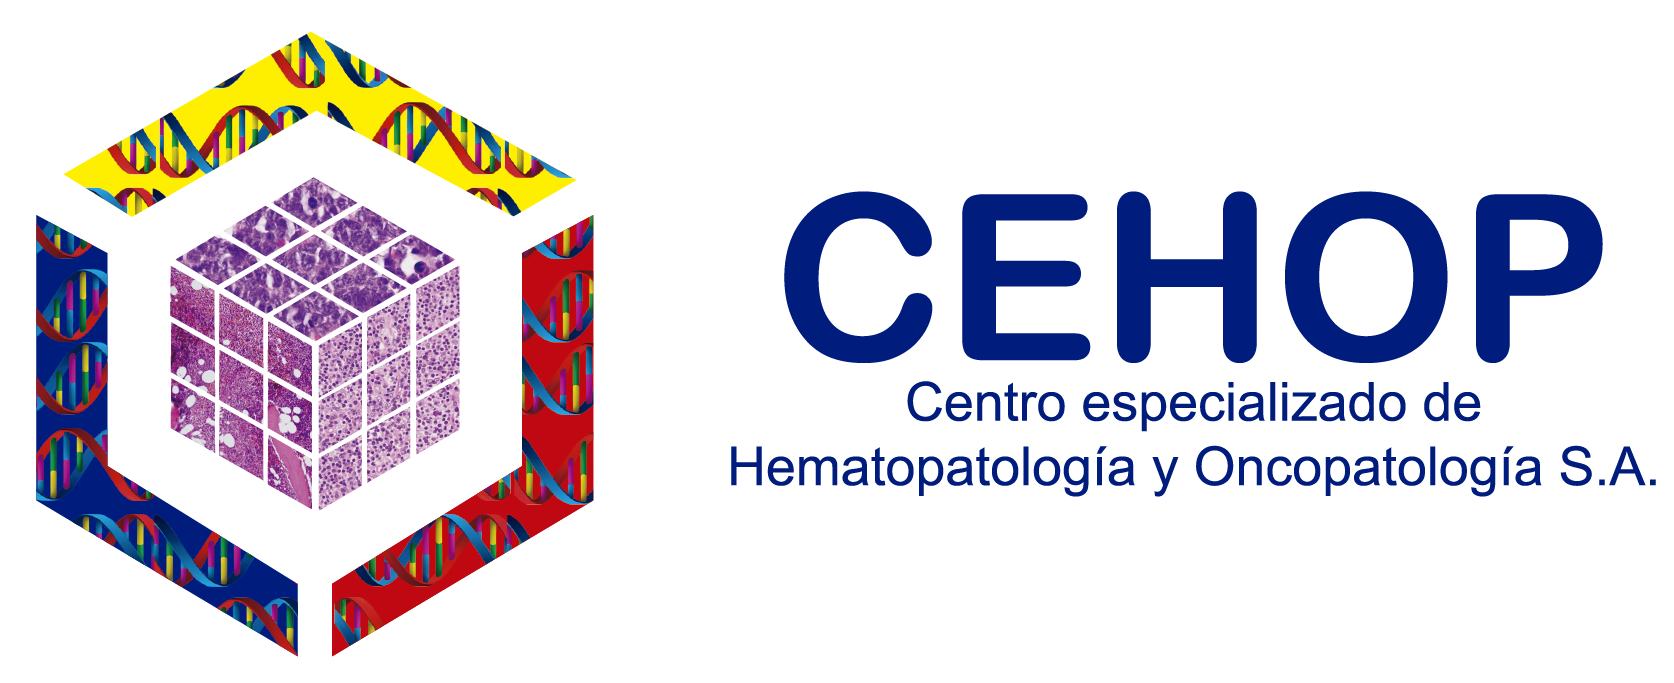 Centro Especializado de Hematopatologia y Oncopatologia